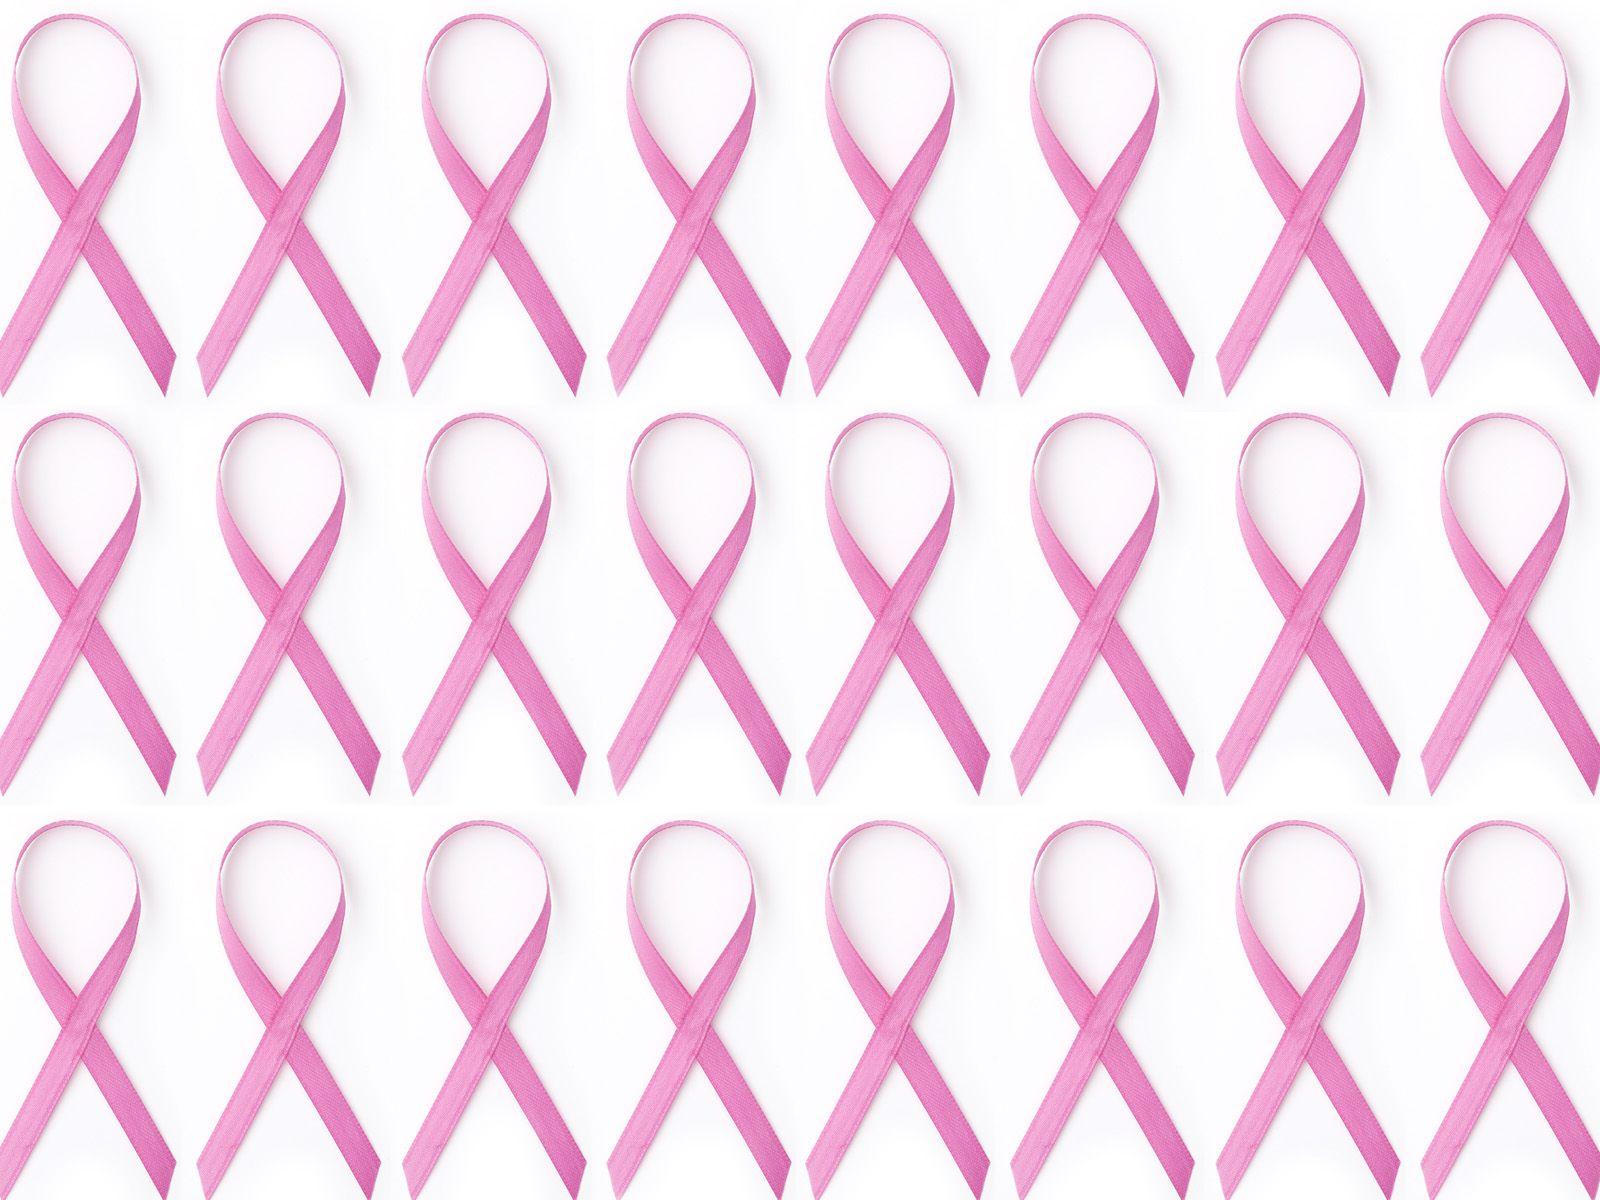 International Breast Cancer Day